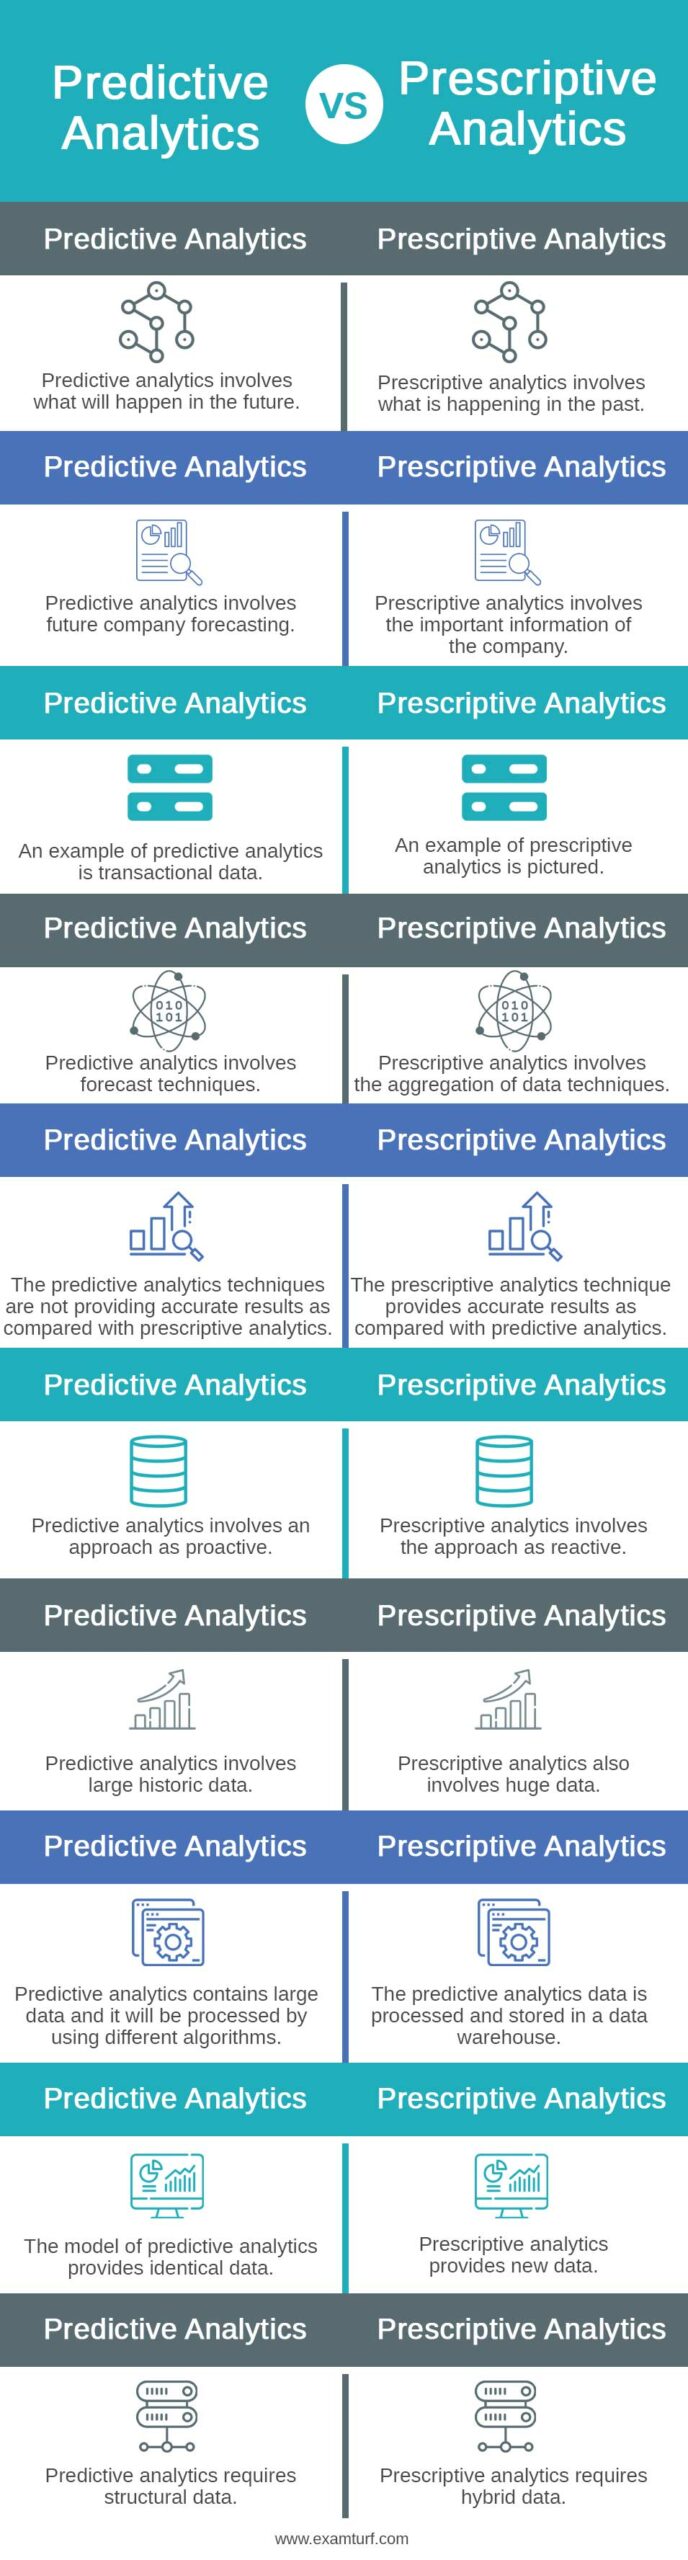 Predictive-Analytics-vs-Prescriptive-Analytics-info